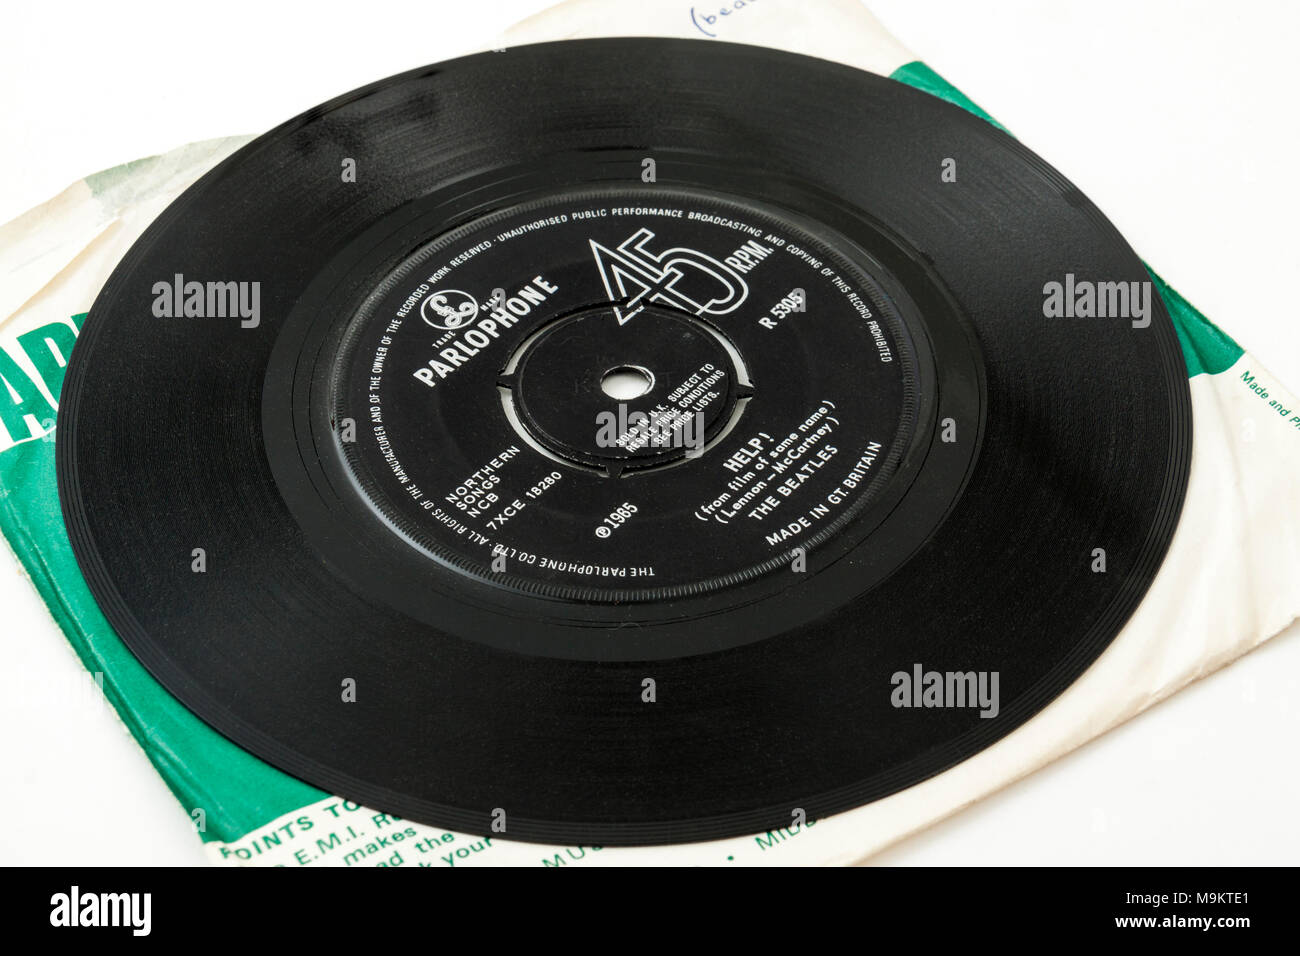 1965 Original 45rpm Single 'Hilfe!' von den Beatles (Parlophone R 5305) Stockfoto